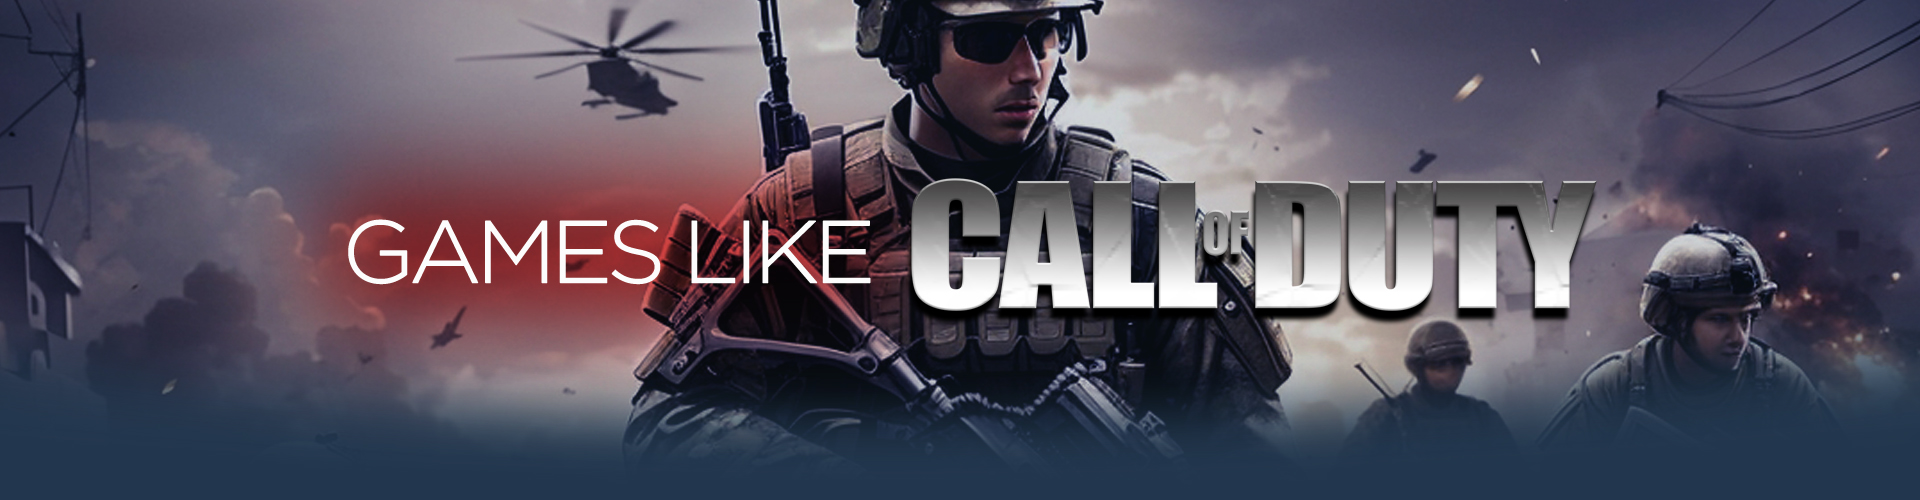 Games like Call of Duty